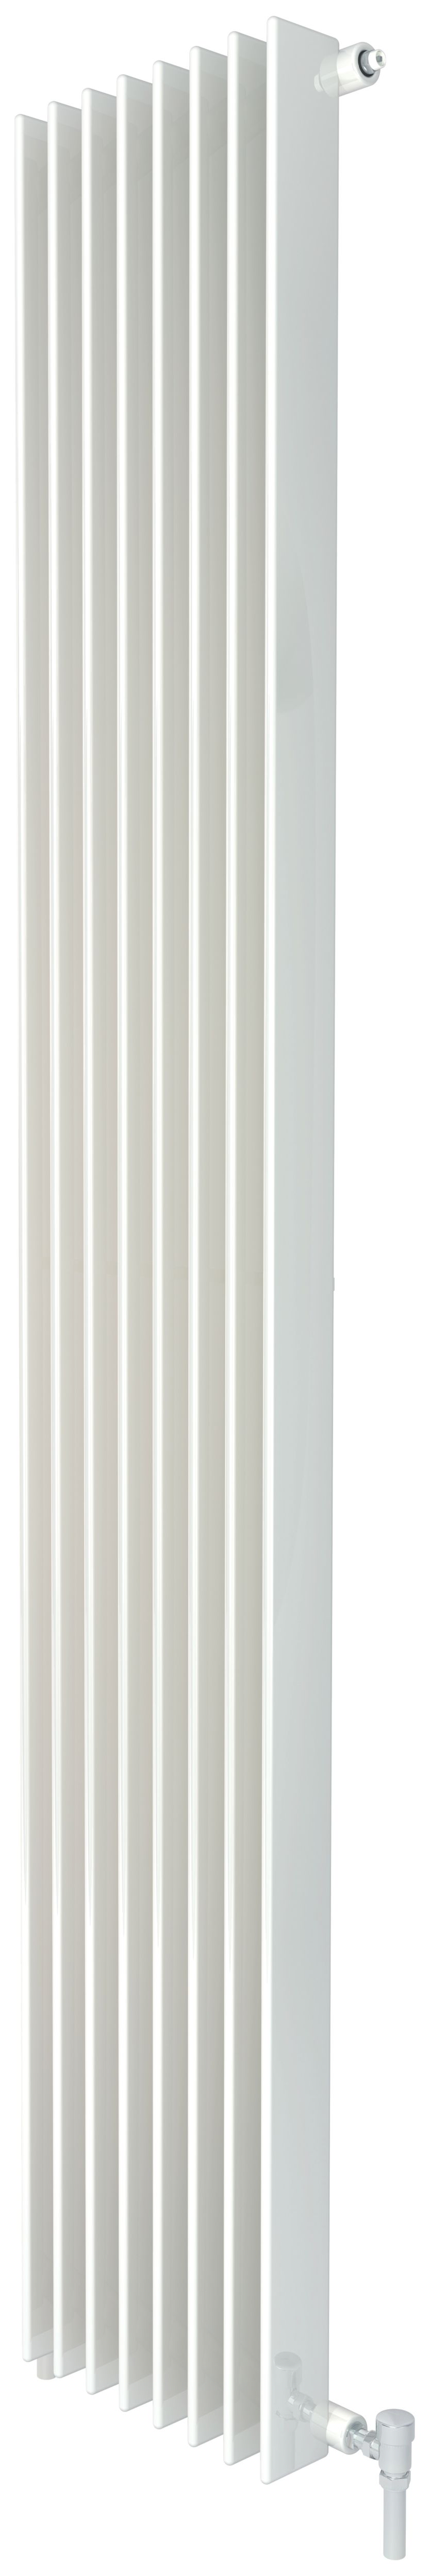 Image of Henrad Verona Slim Single Panel Vertical Designer Radiator - White 1800 x 320 mm